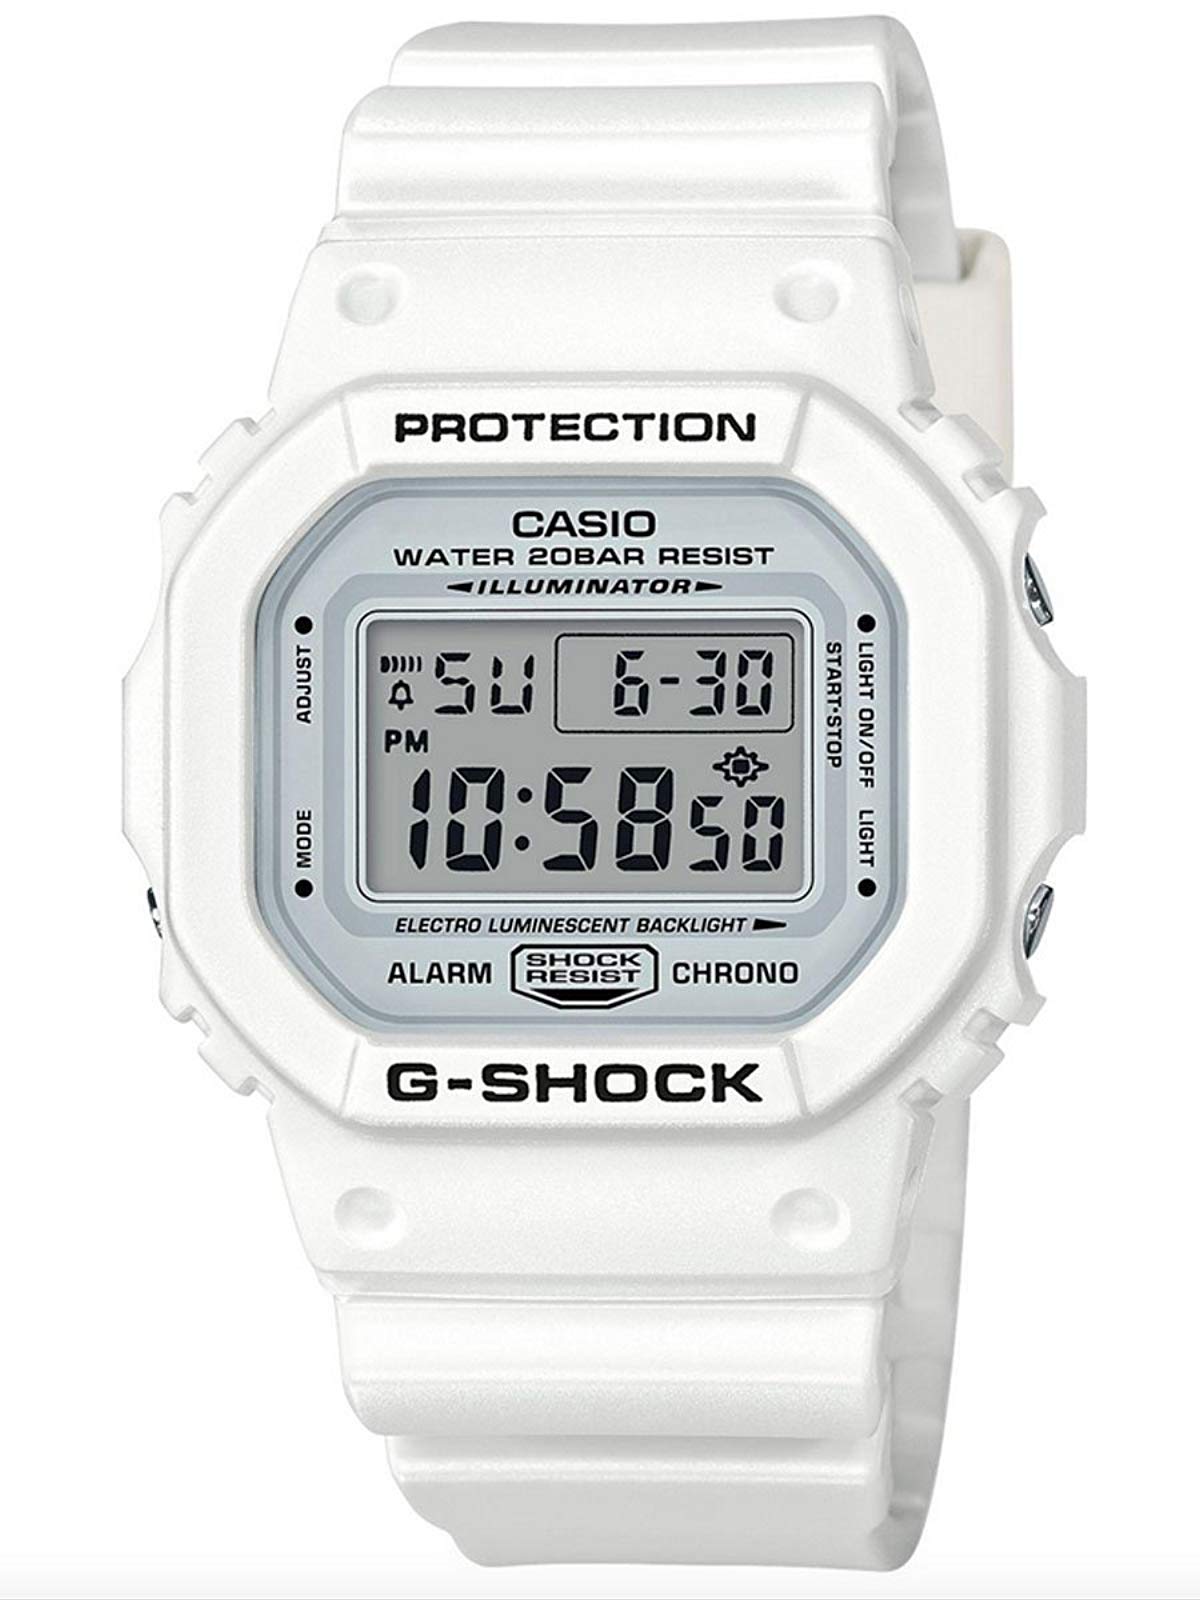 特別セール品】 新品未使用 並行輸入G-SHOCK DW-5600MW-7 DR 時計 